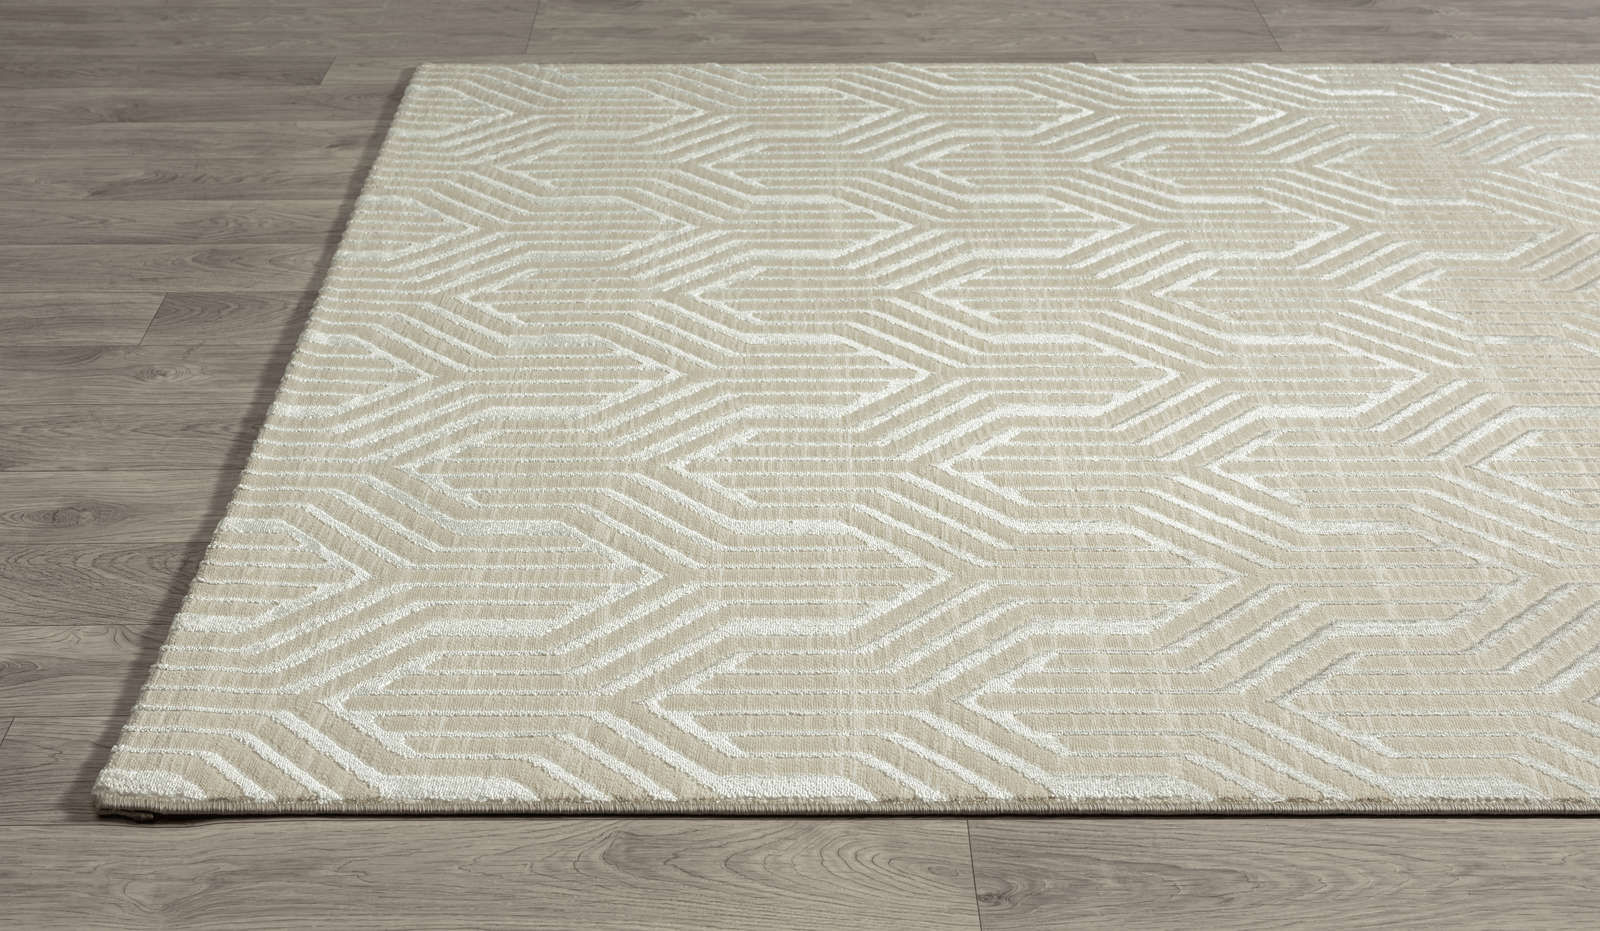             Soft high pile carpet in cream - 170 x 120 cm
        